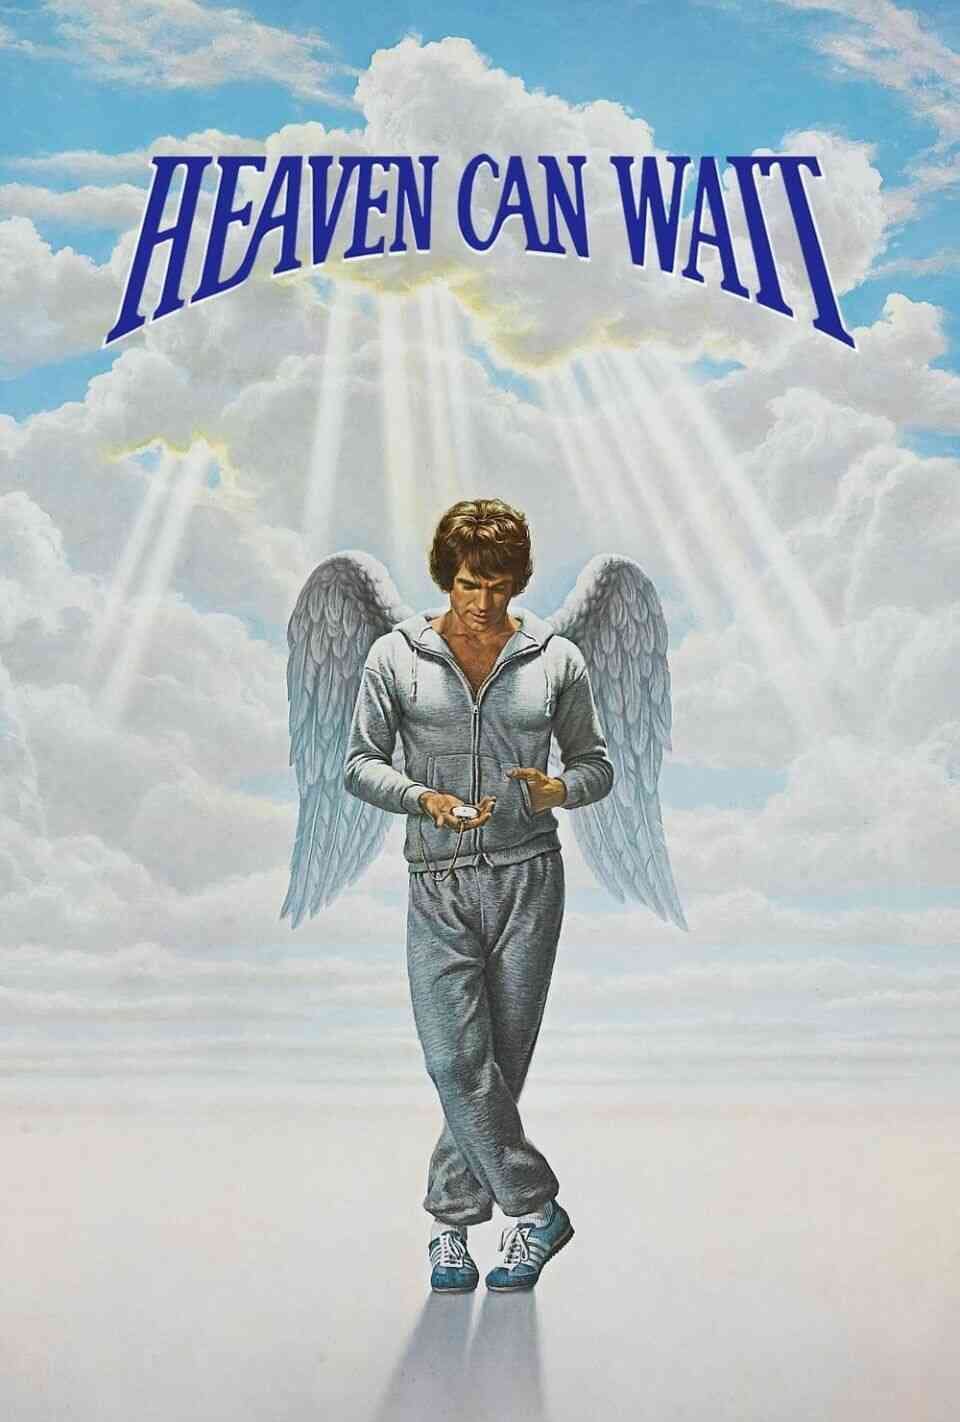 Read Heaven Can Wait screenplay (poster)